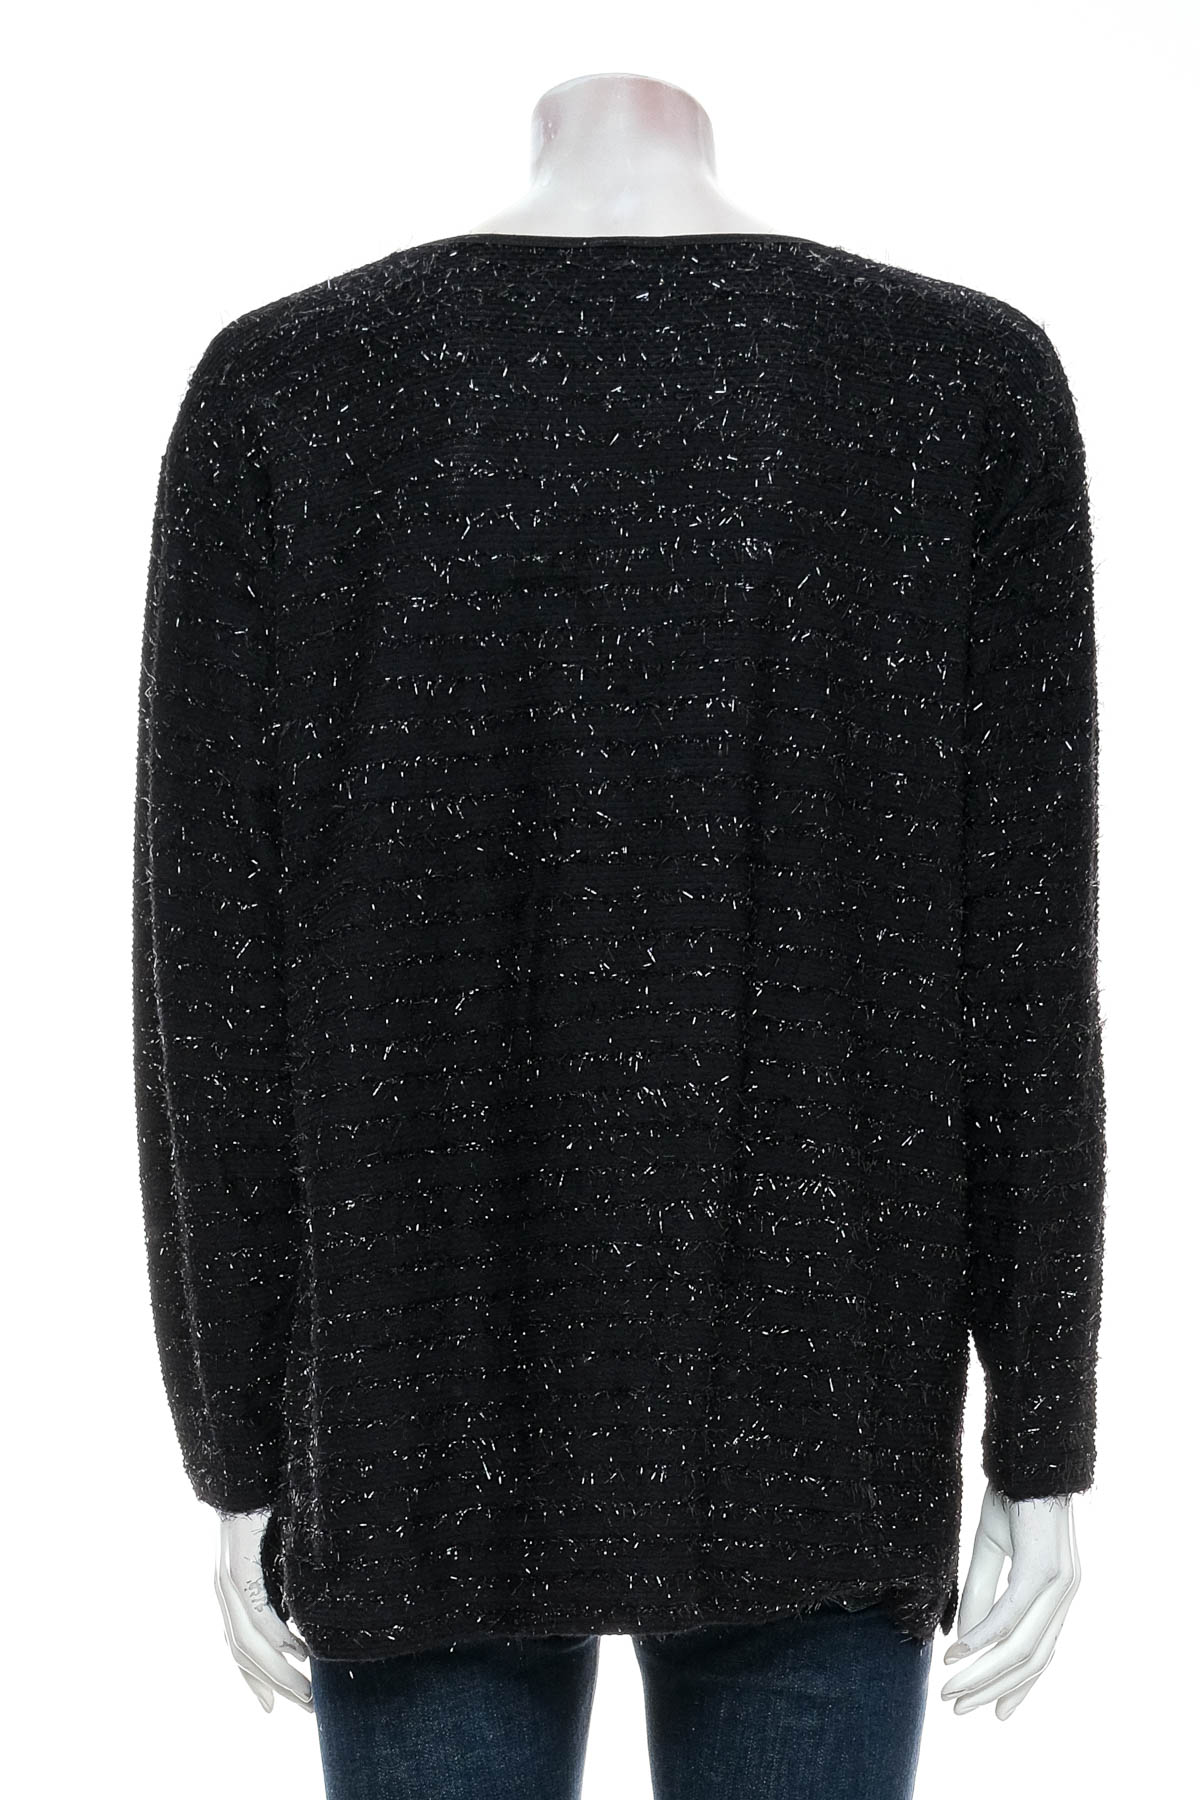 Women's sweater - Fabiani - 1